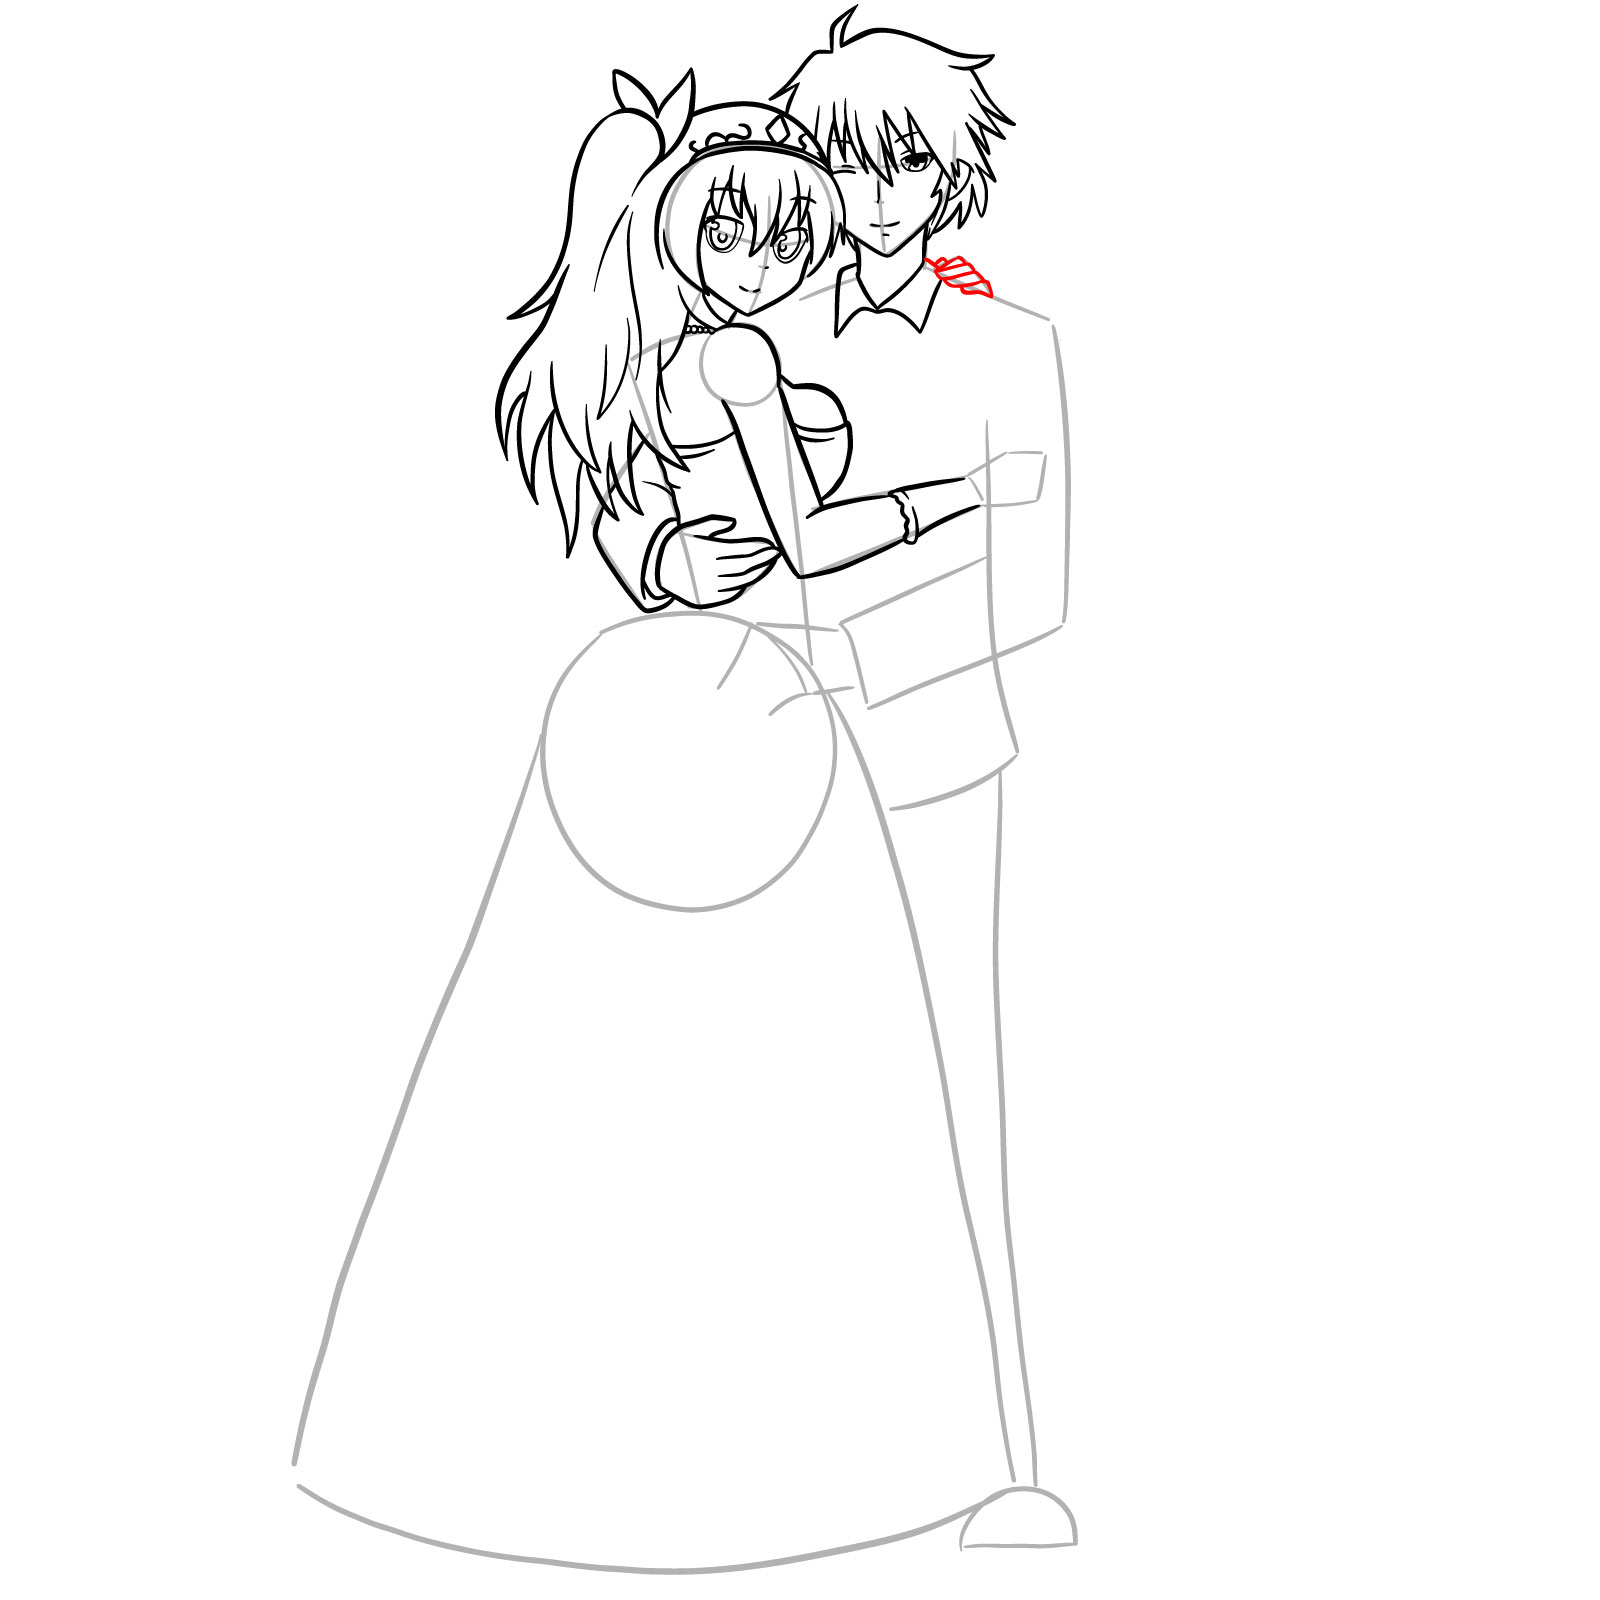 How to draw Ikki and Stella's wedding - step 35